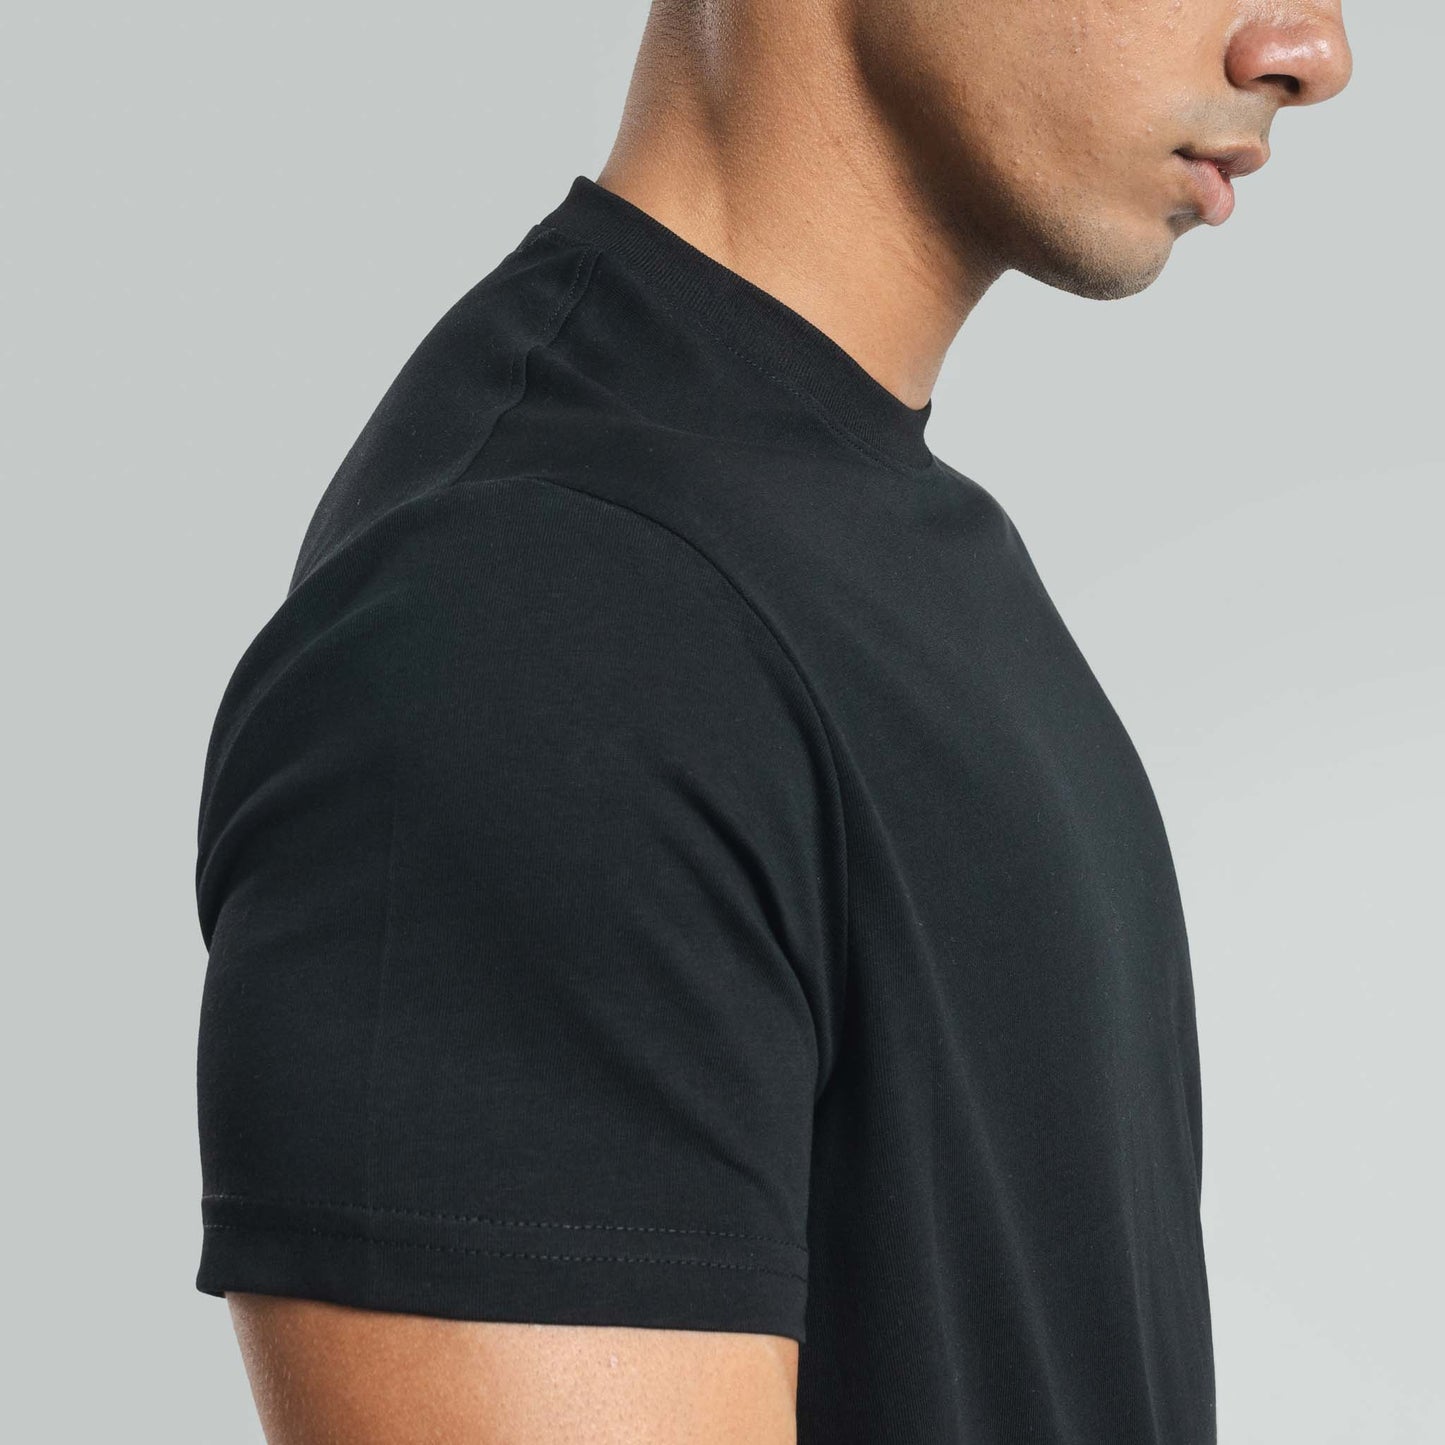 Plain Black crew neck essential t-shirt